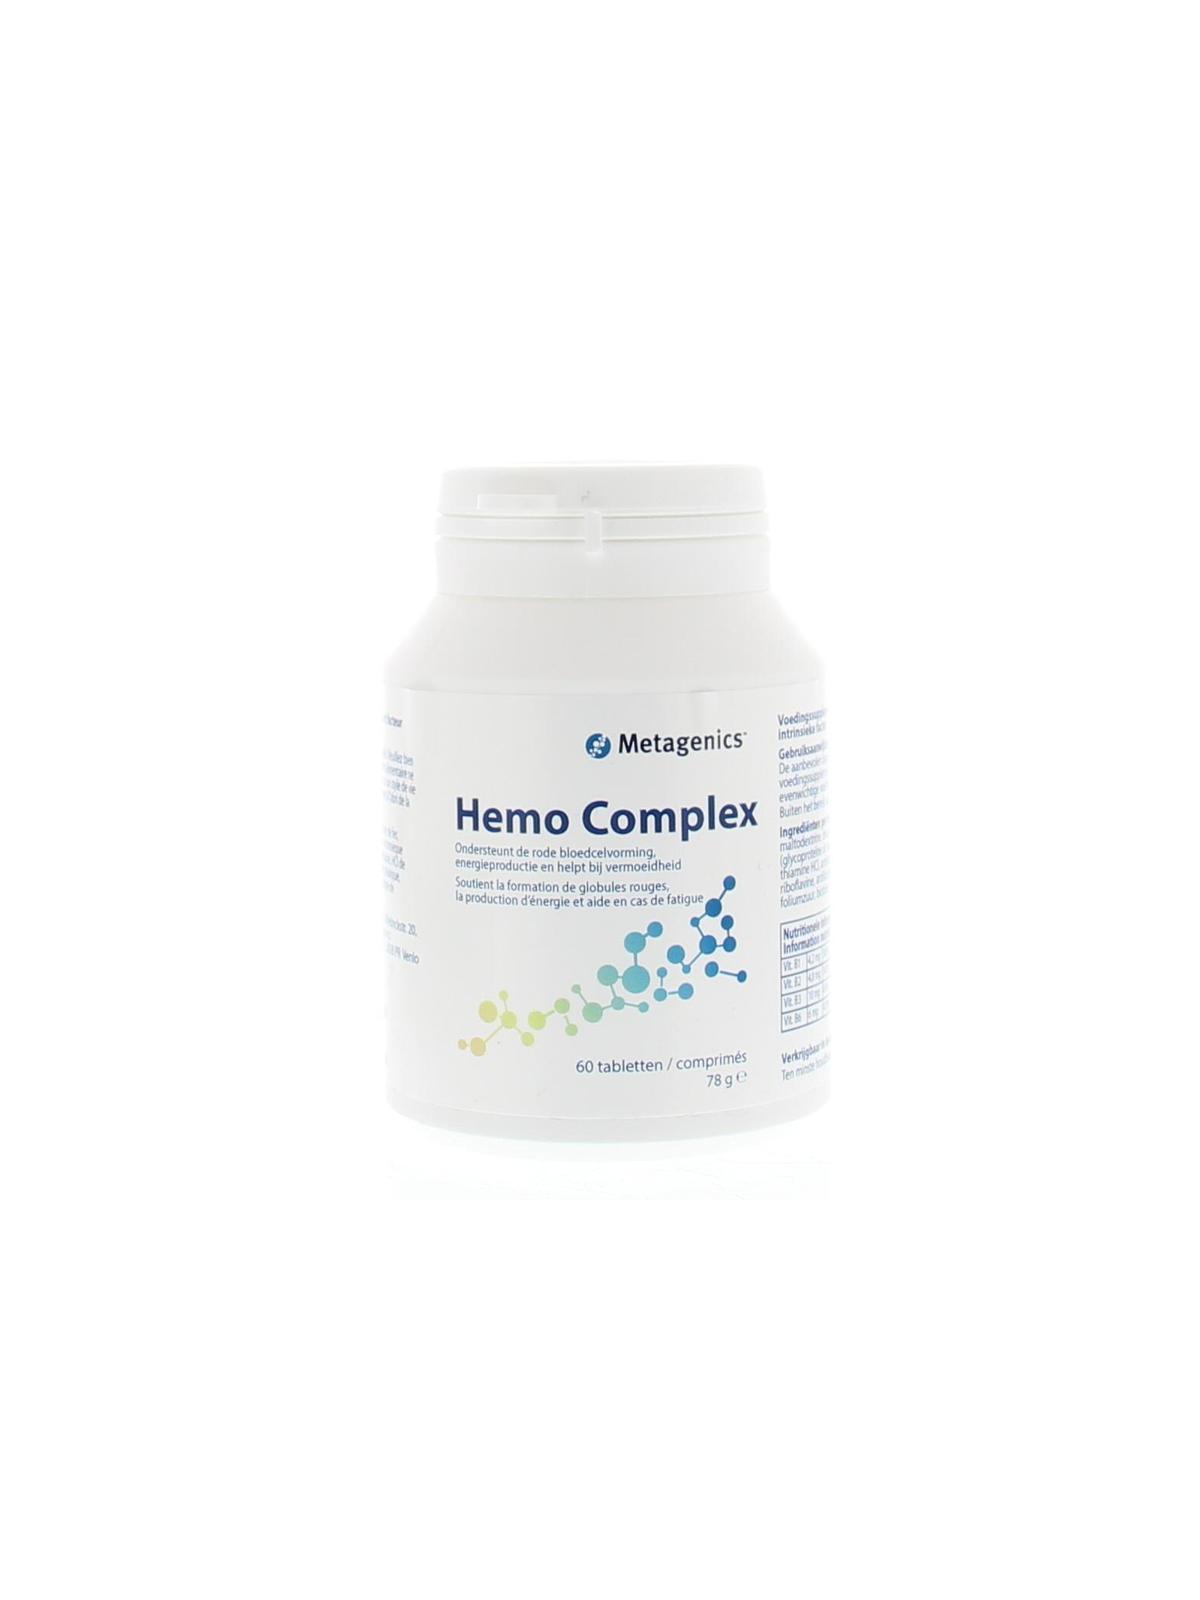 Hemo complex